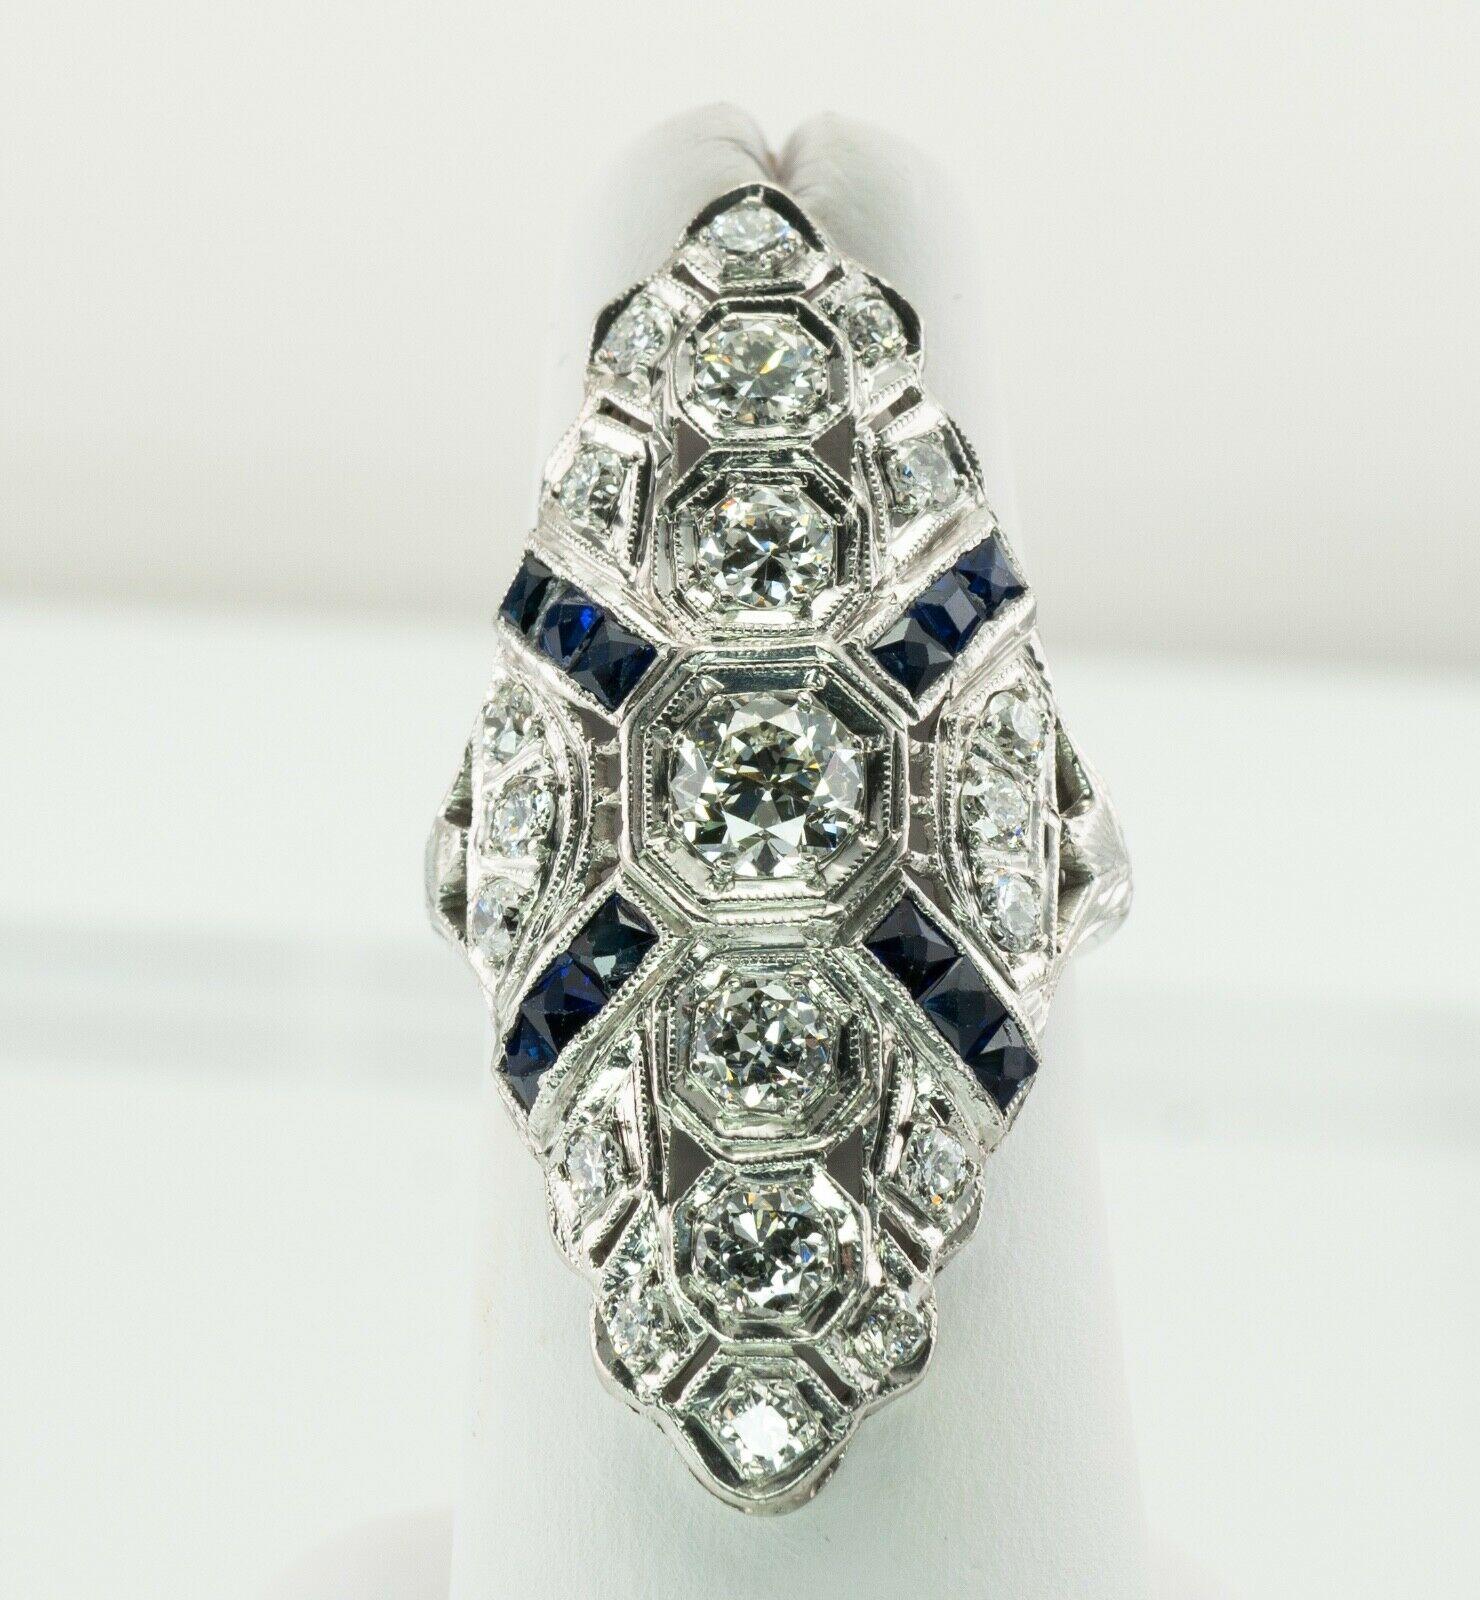 Diamond Sapphire Ring Platinum Edwardian Antique C.1910s European Cut

This gorgeous vintage circa 1910s luxurious Platinum ring is set with diamonds and sapphires.
The center old European cut diamond is .50 carat. Four round cut diamonds total .90